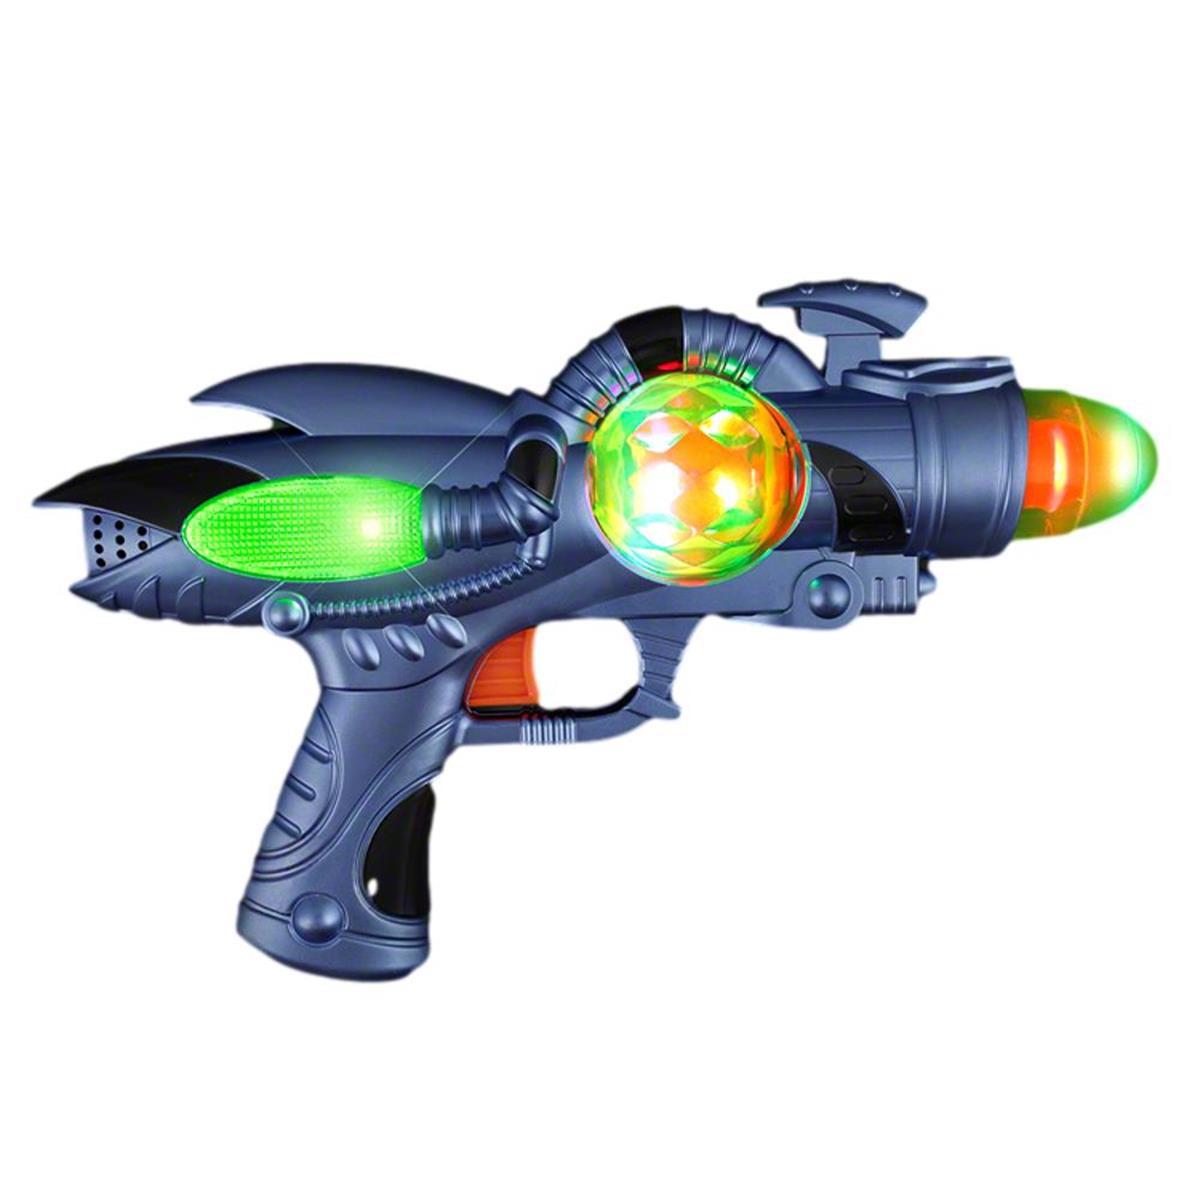 Picture of Blinkee LUMSSBLG Light Up Musical Spinning Space Blaster Laser Gun